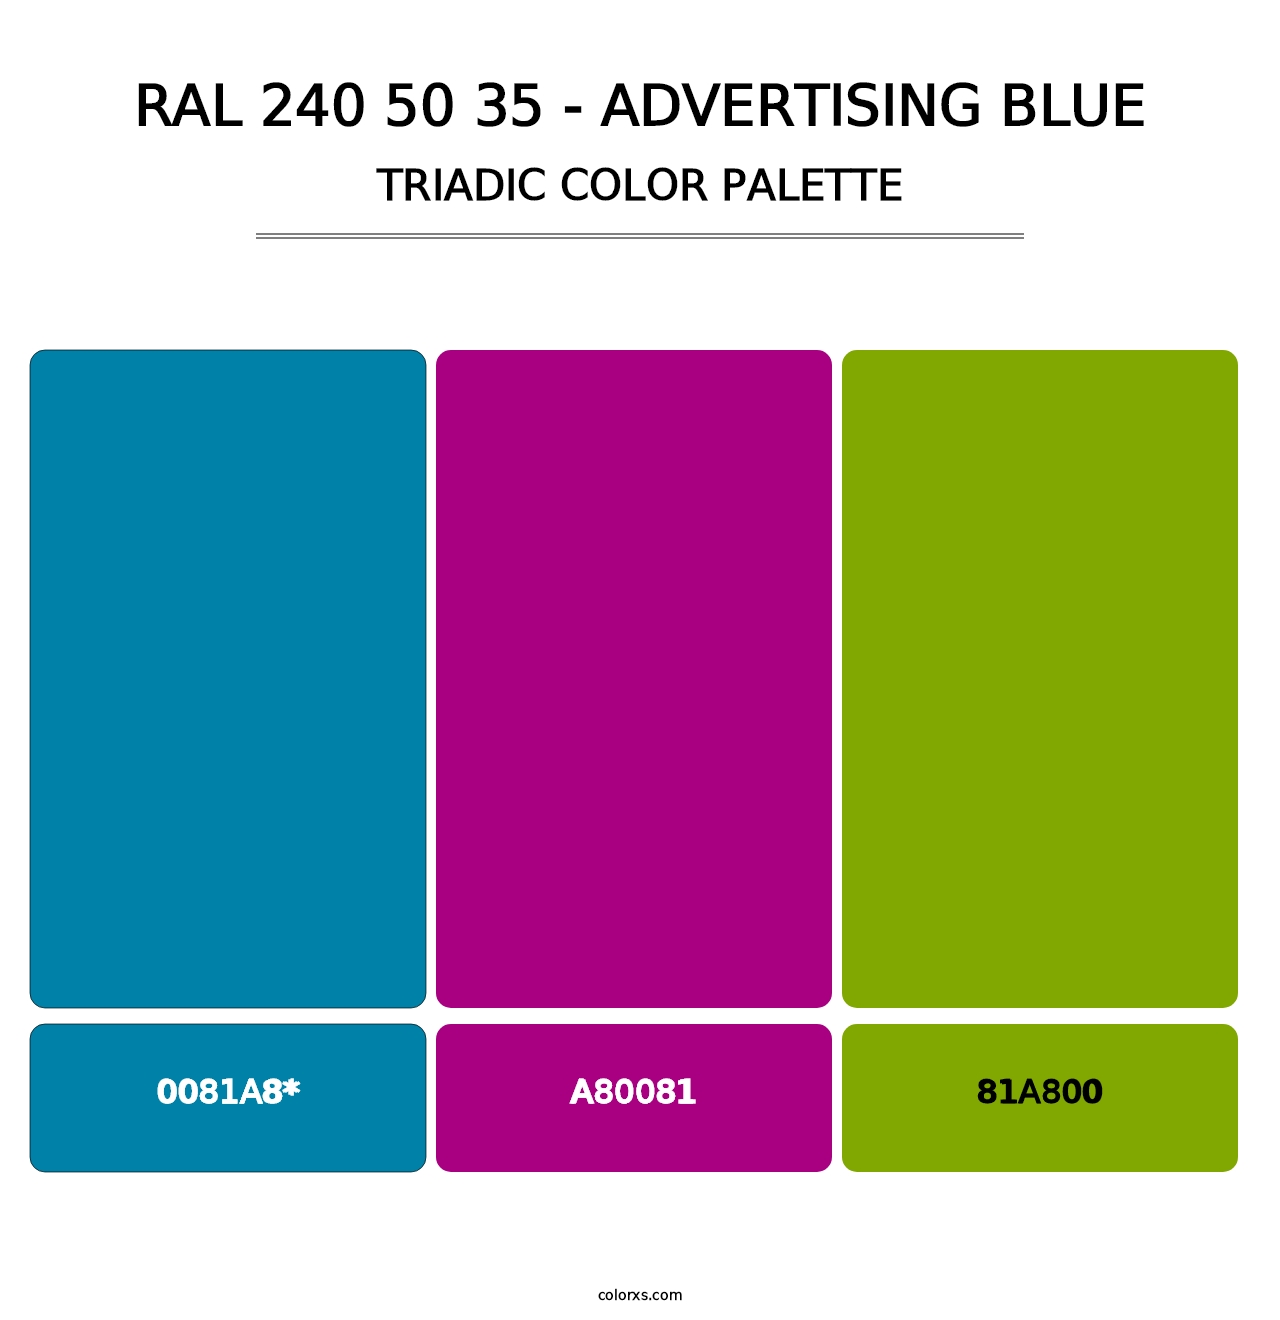 RAL 240 50 35 - Advertising Blue - Triadic Color Palette